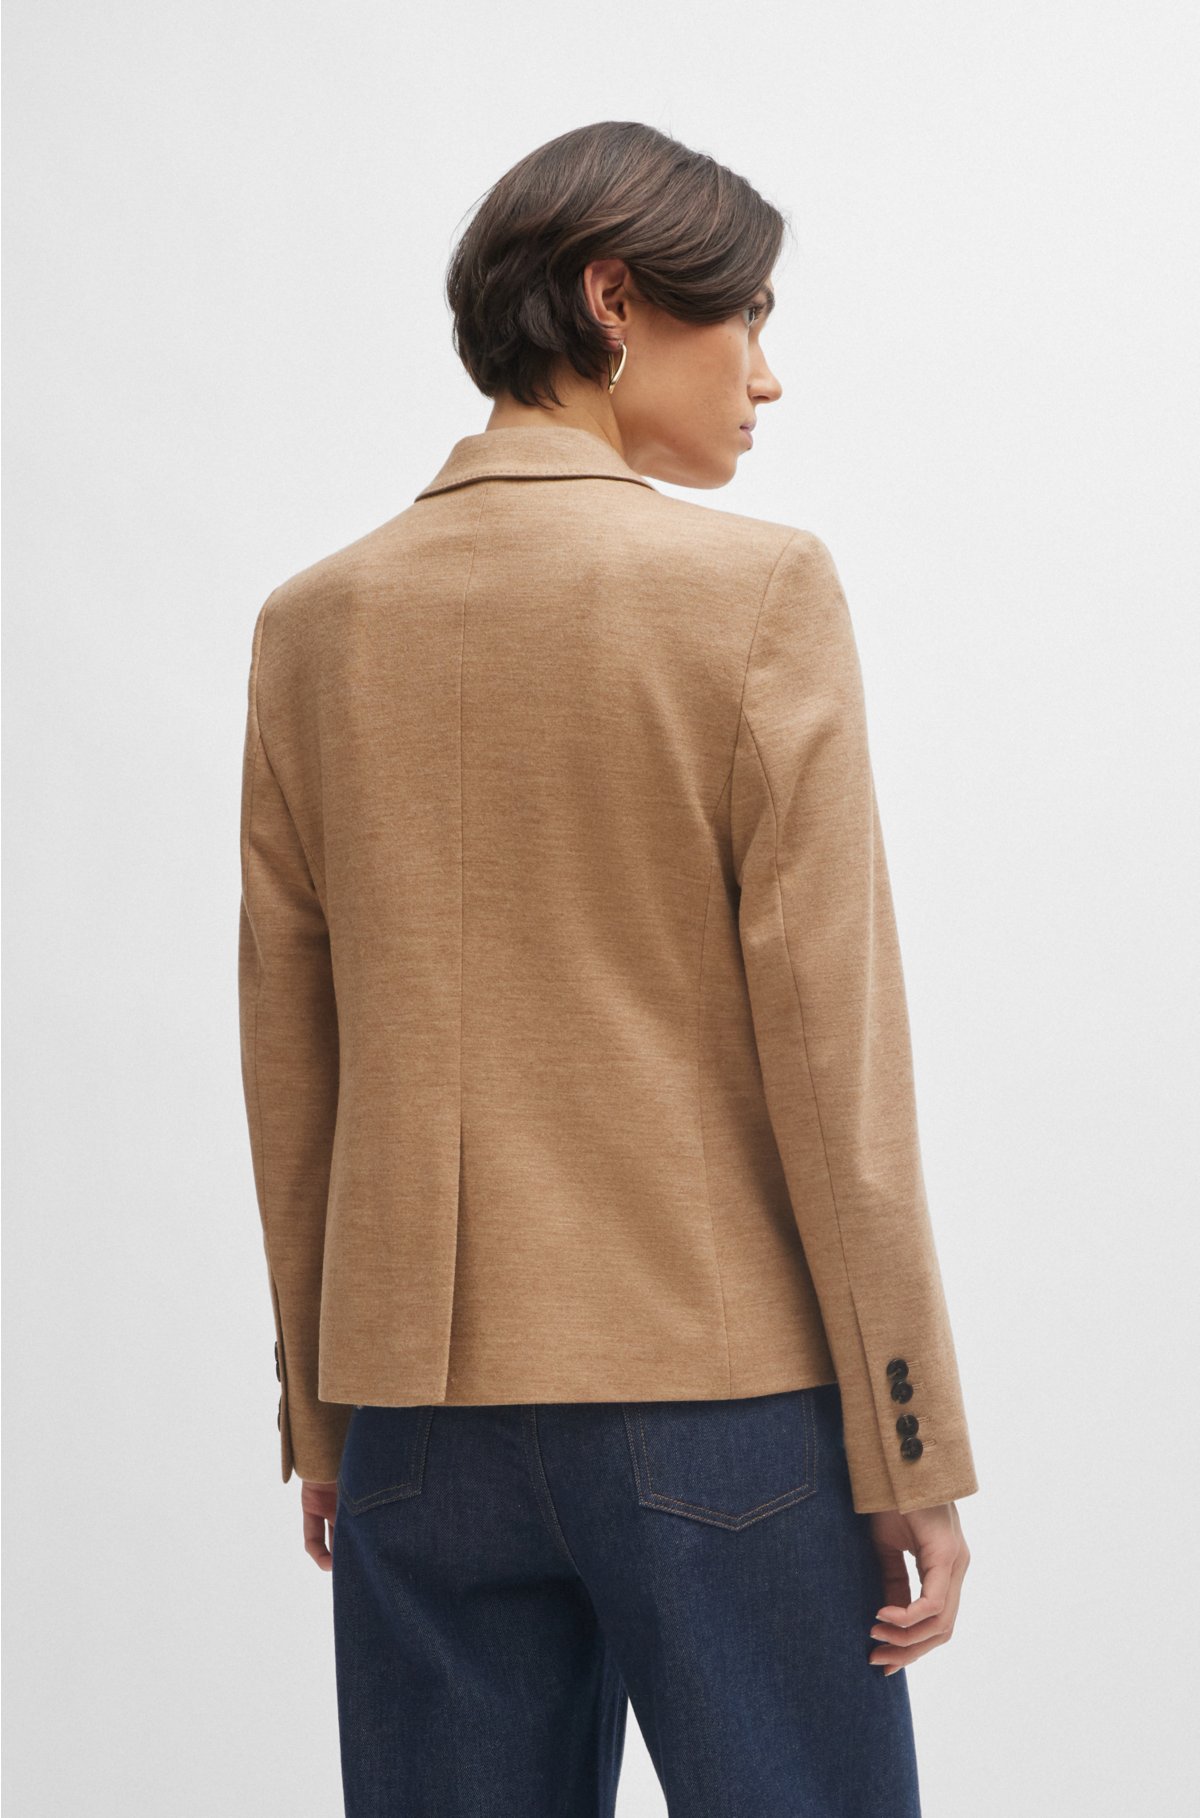 Slim-fit jacket in virgin wool and cotton, Light Brown